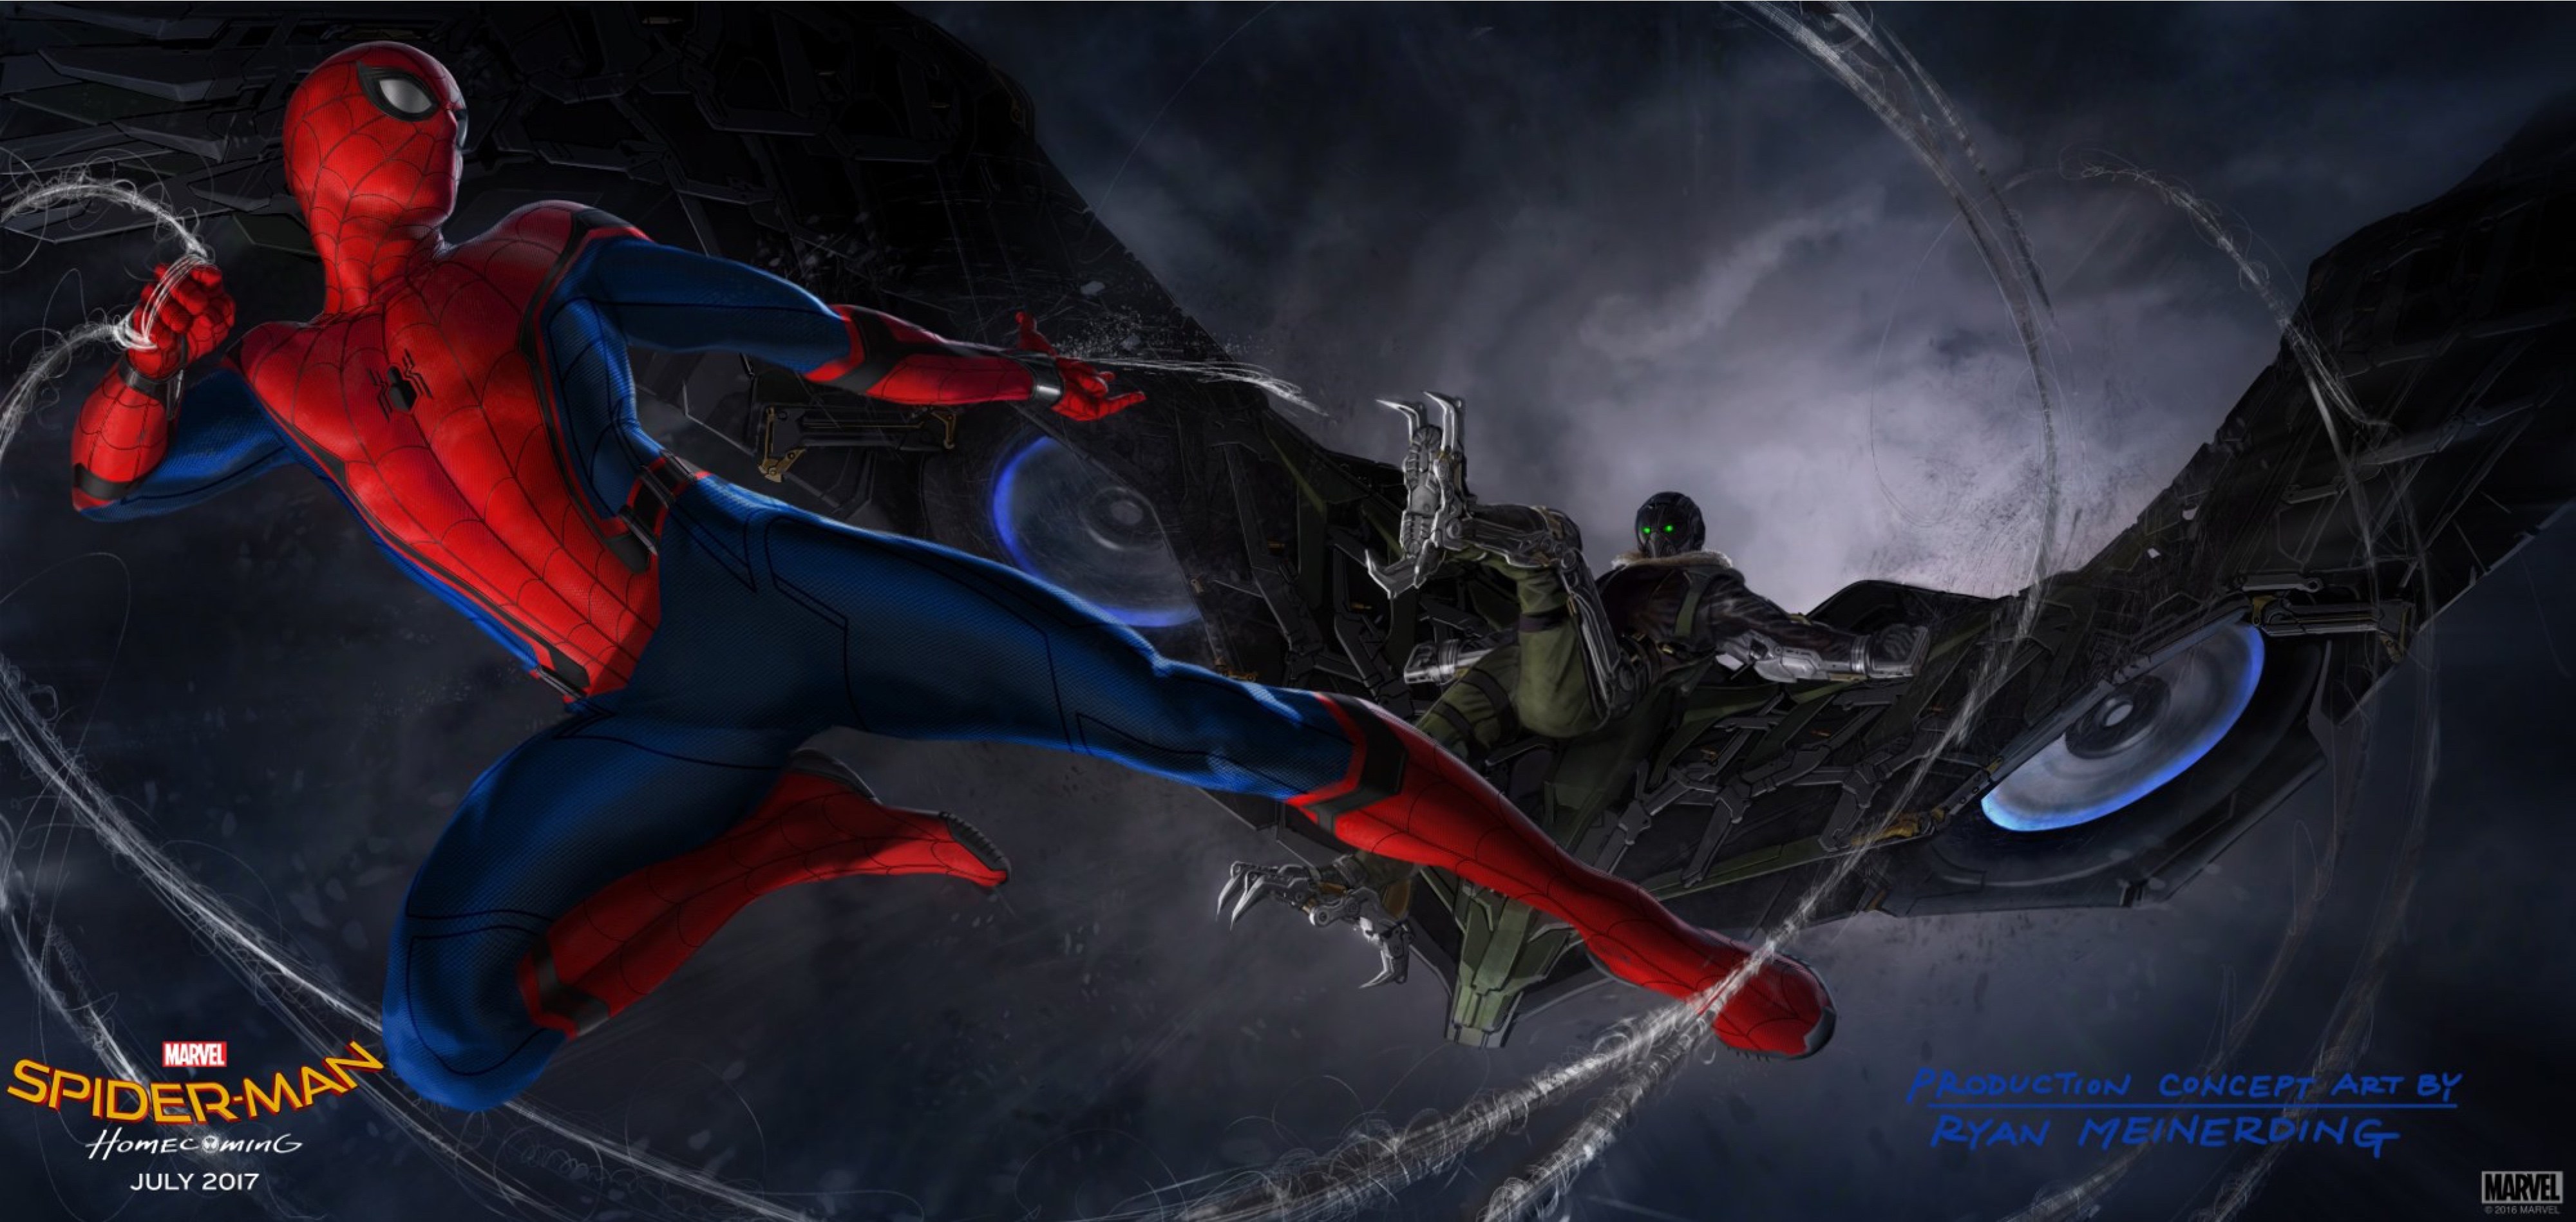 Spider-Man vs. Vulture; concept art by Ryan Meinerding (Marvel Studios)